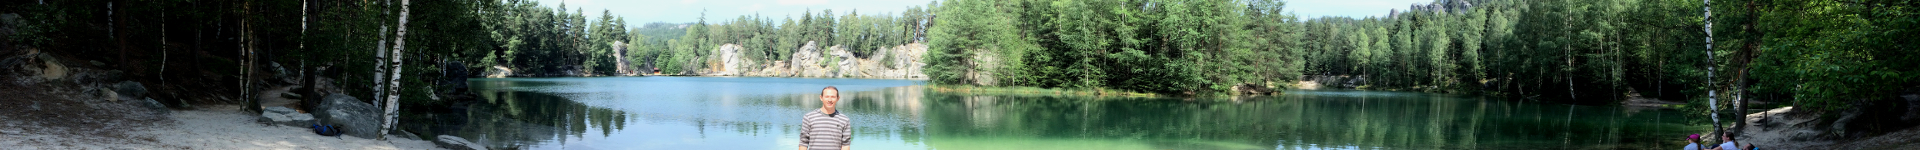 Adršpach Lake - Adršpach, Czech Republic